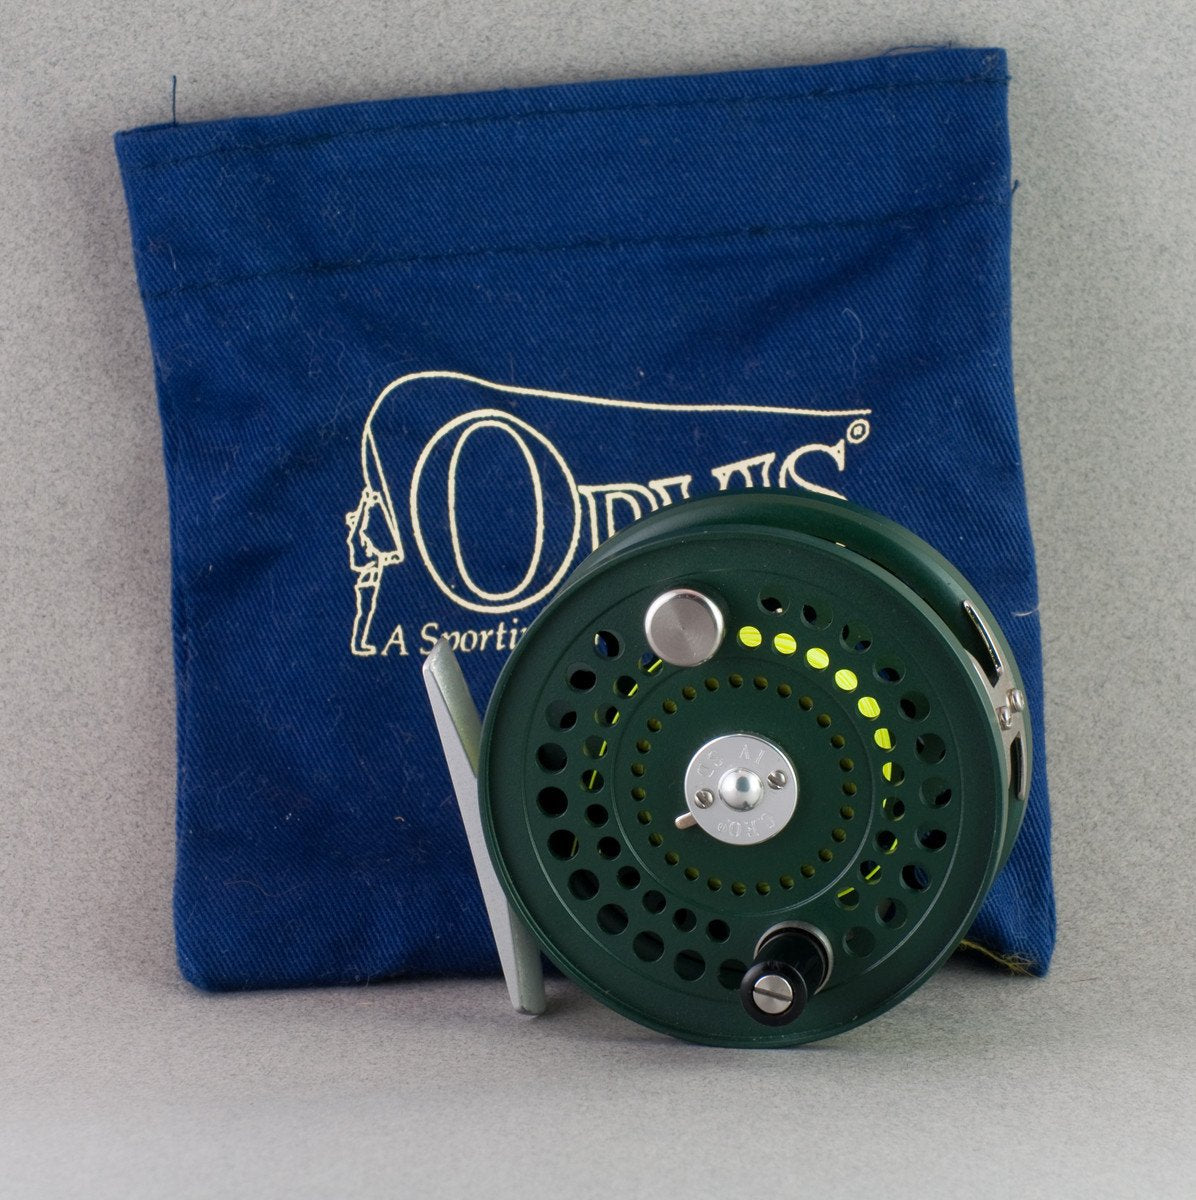 Orvis CFO IV Disc Saltwater Fly Reel - Green